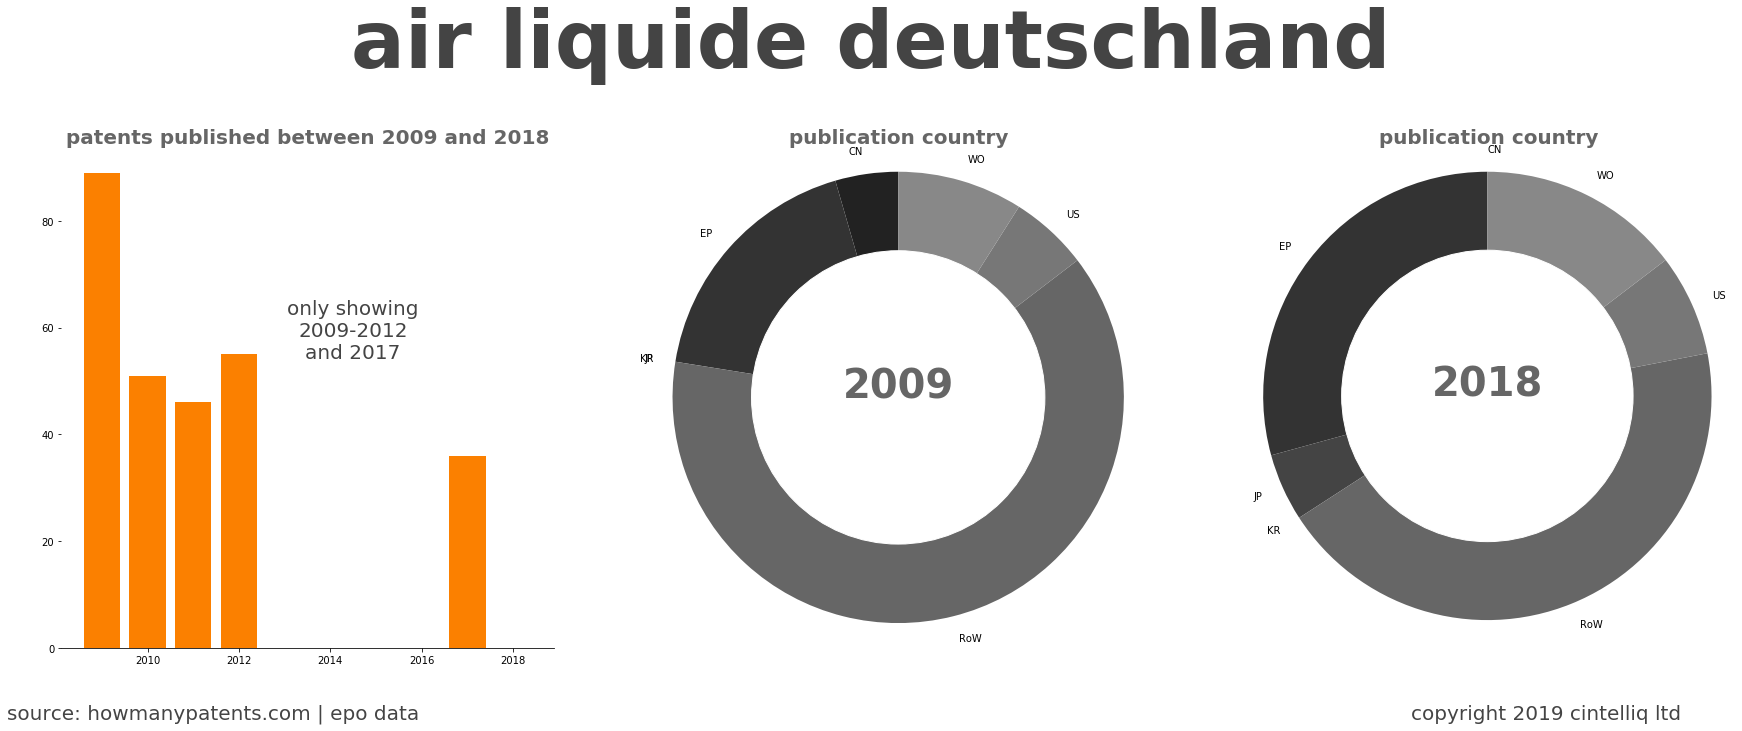 summary of patents for Air Liquide Deutschland